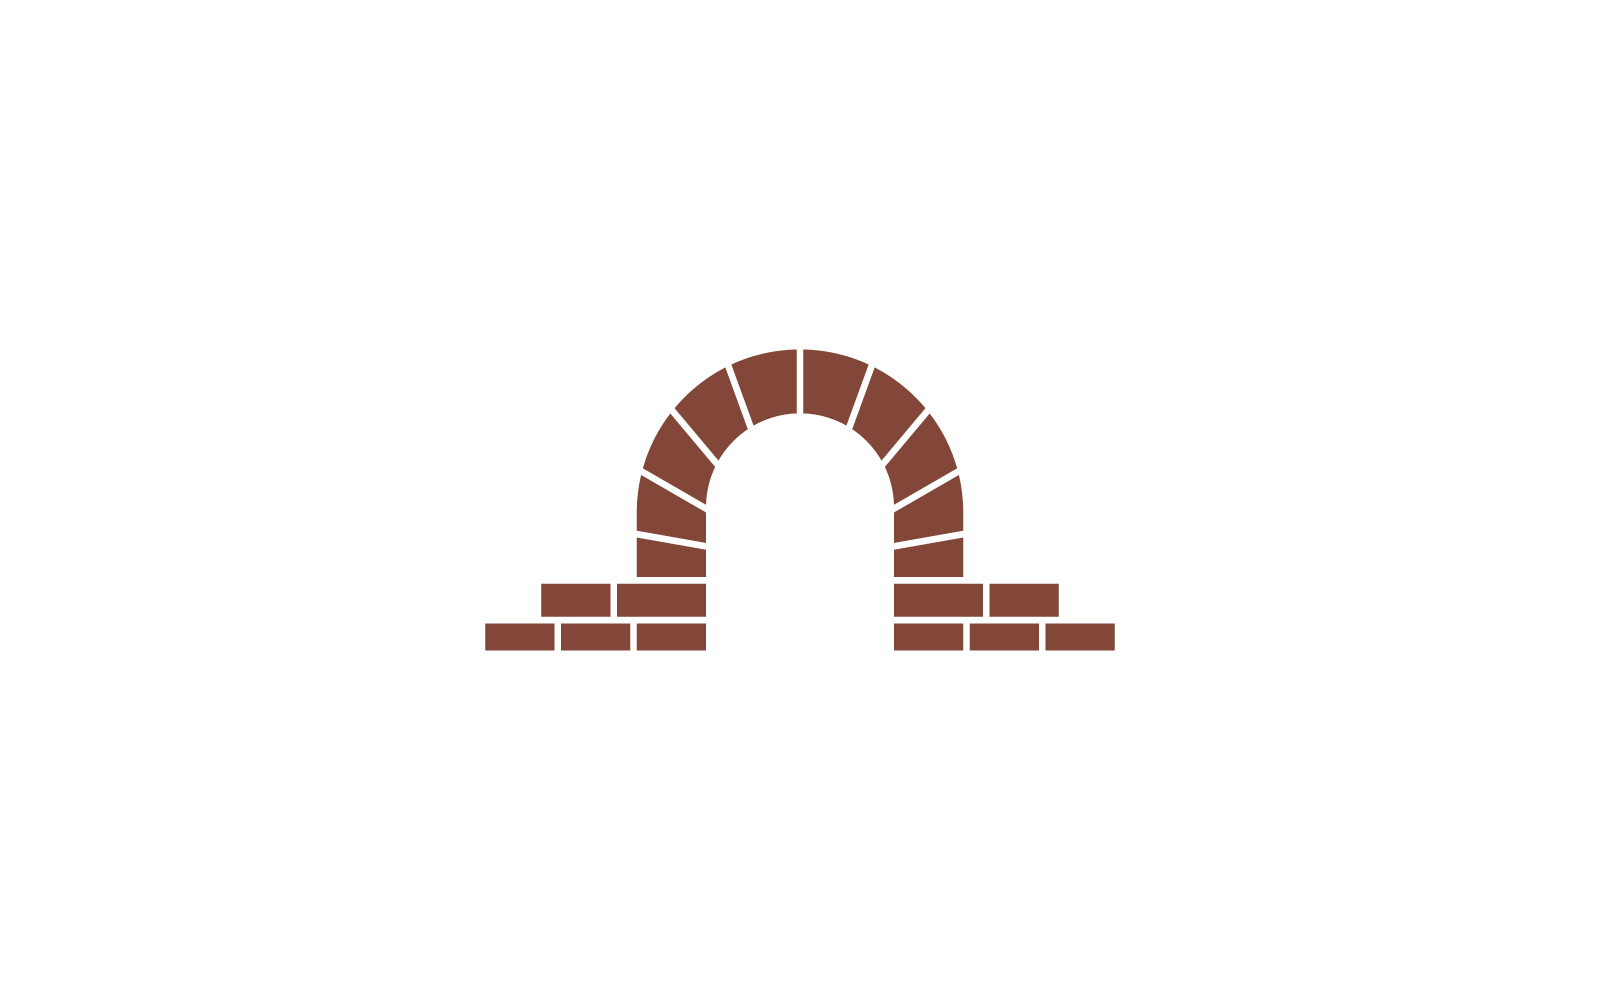 Brick bridge logo vector icon ilustration design